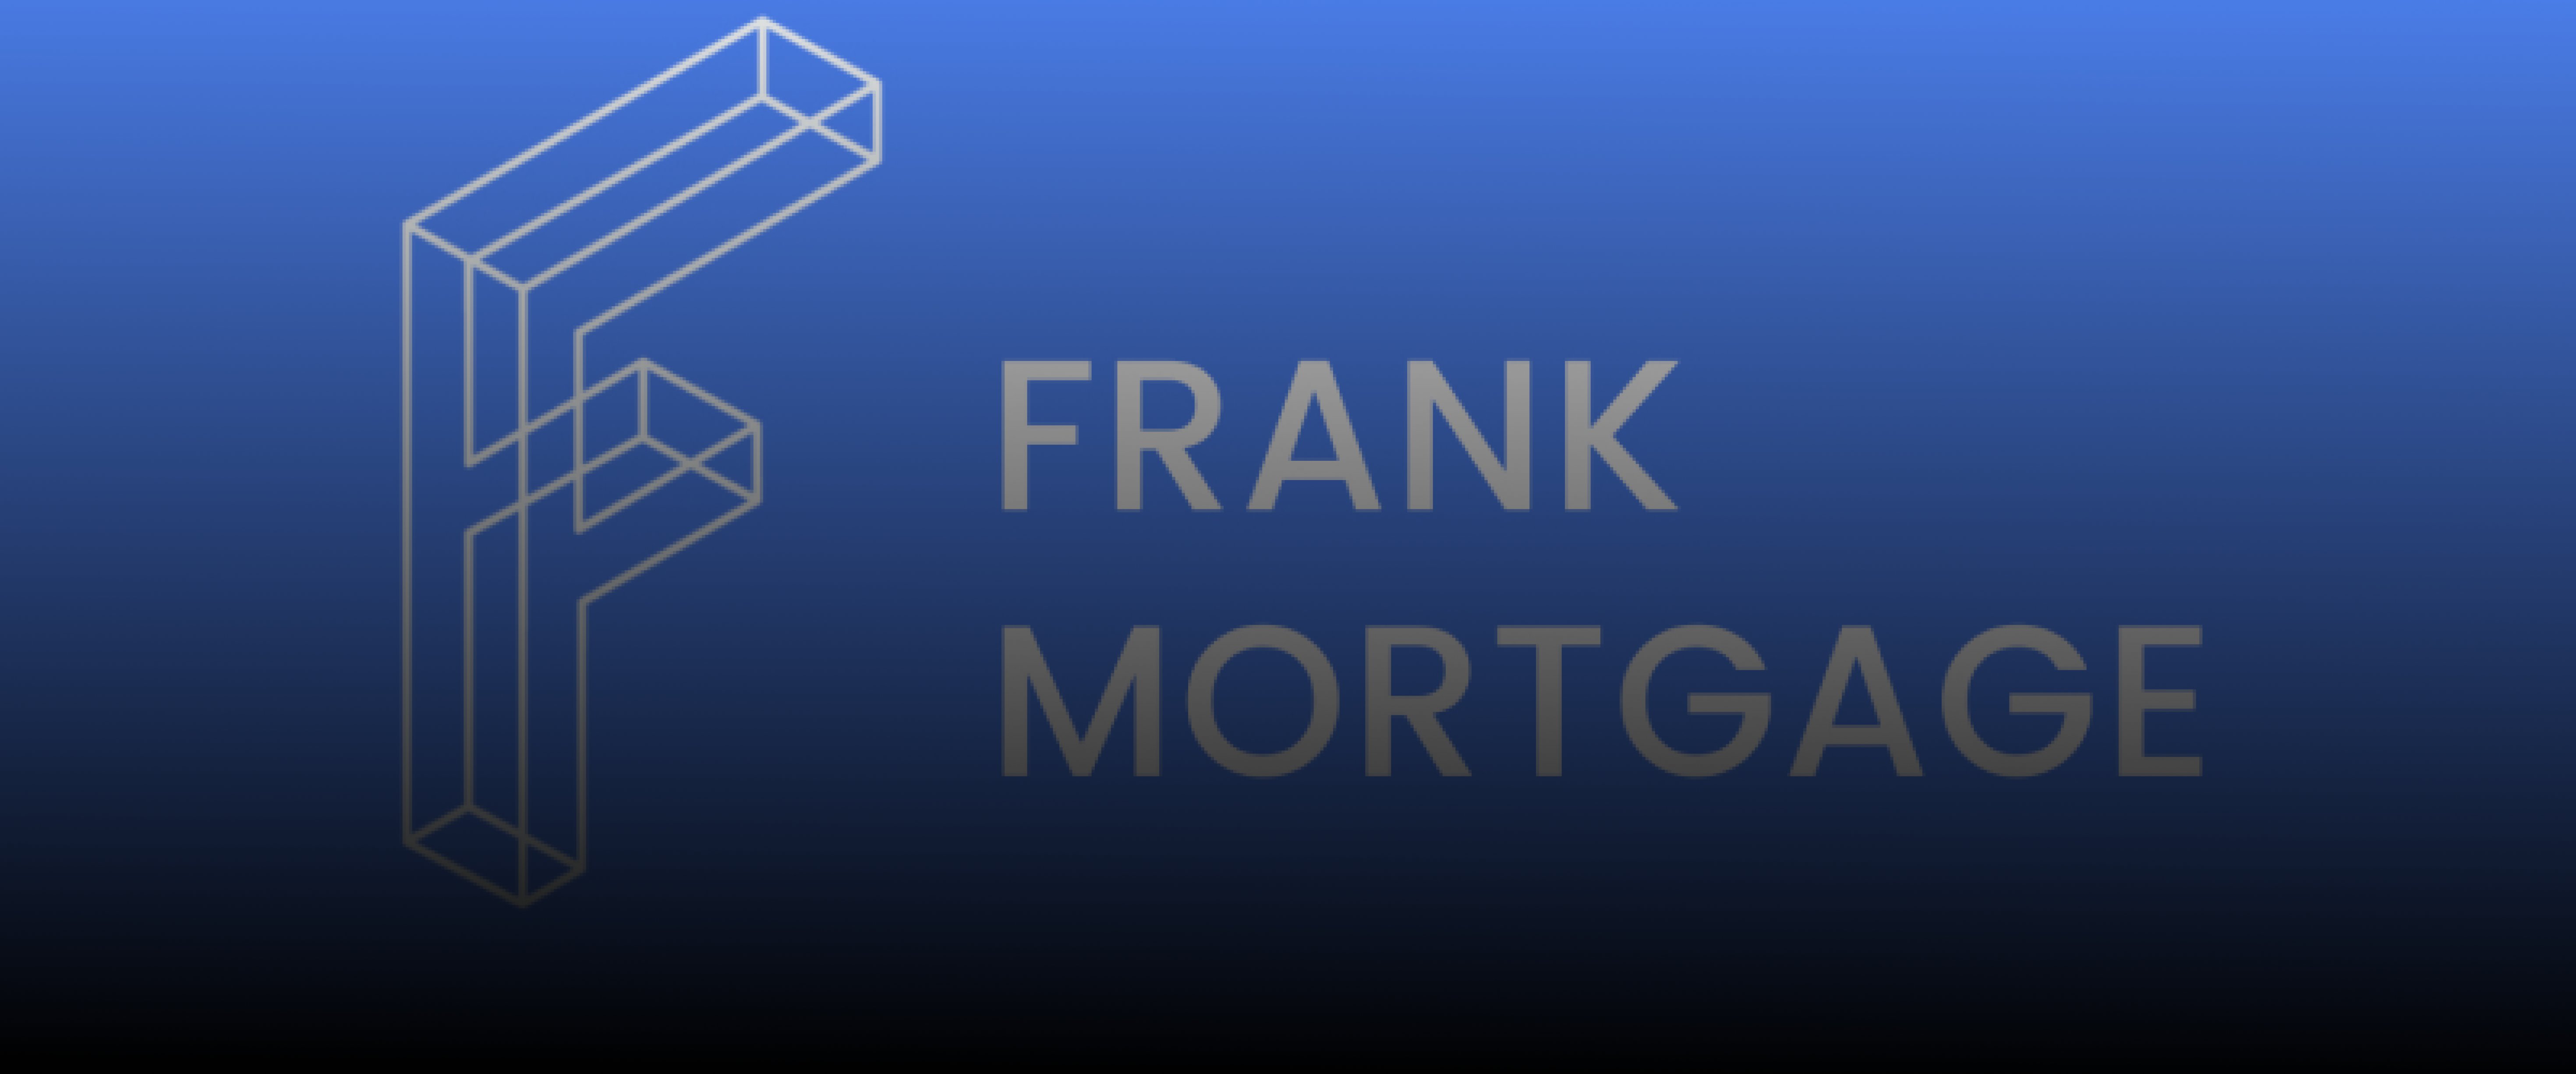 Frank Mortgage case study header image